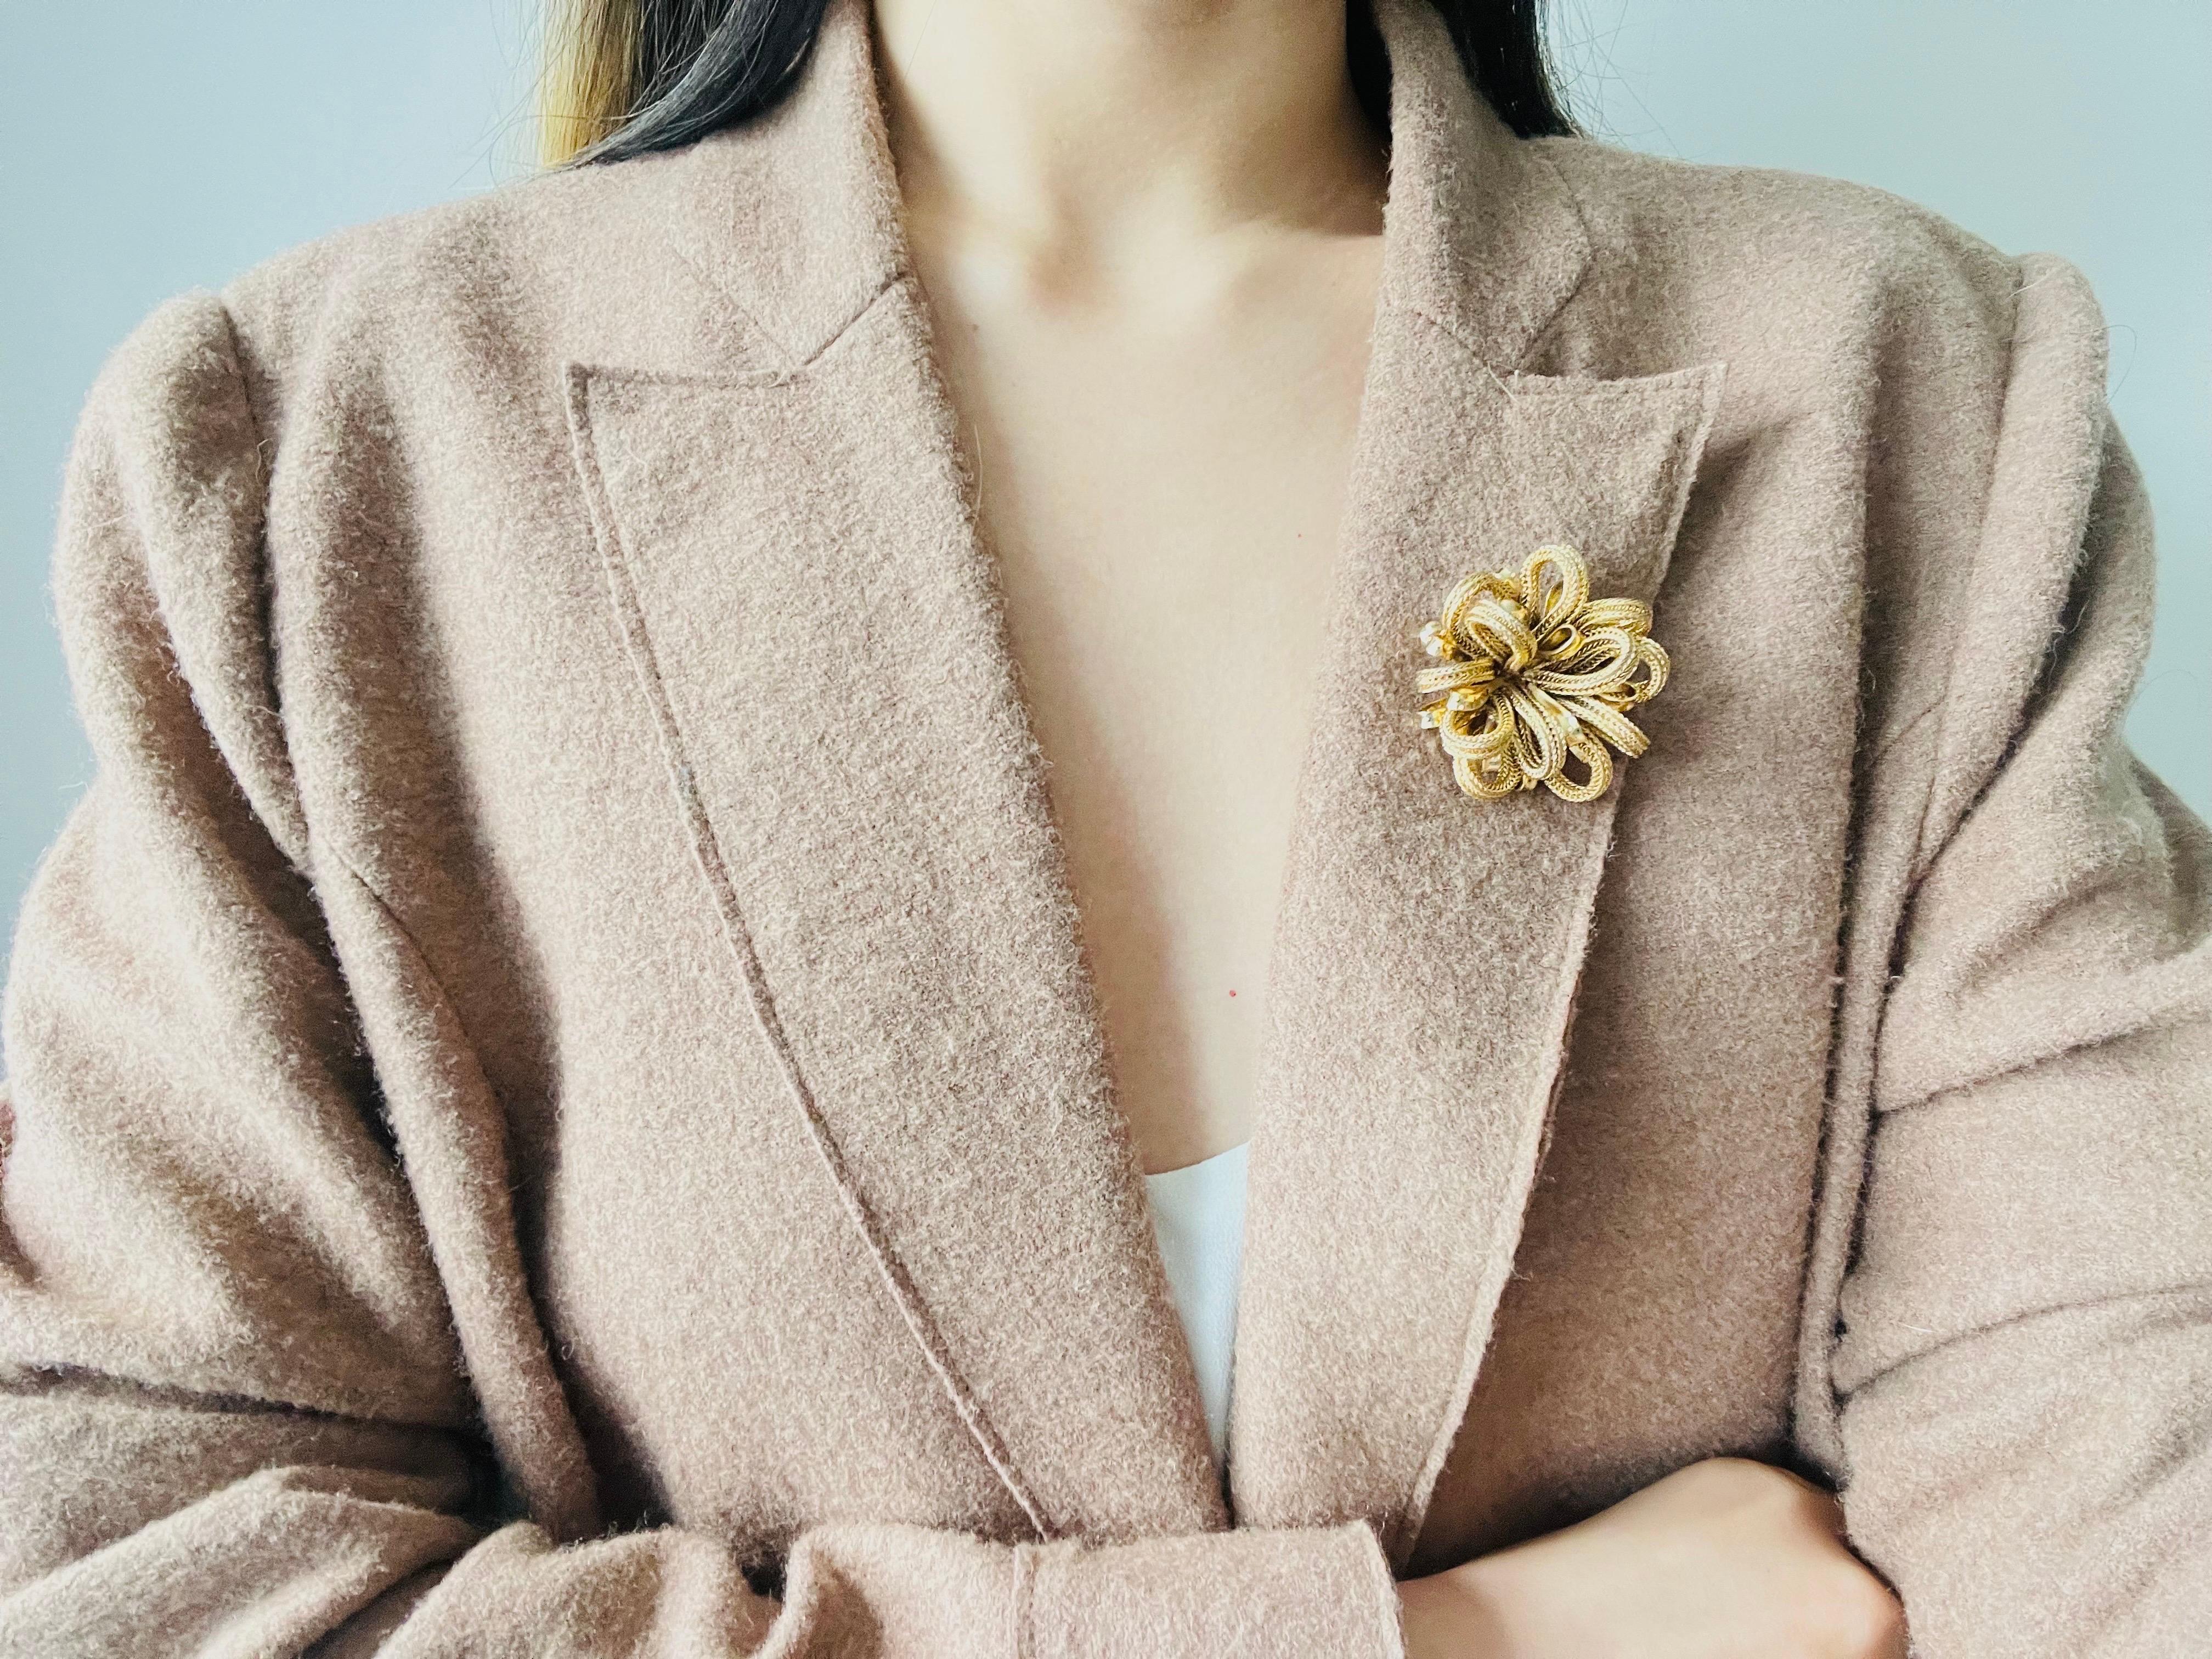 Christian Dior Vintage 1967 Vivid Mesh Knit Ribbon Bow Flourish Flower Brooch For Sale 1